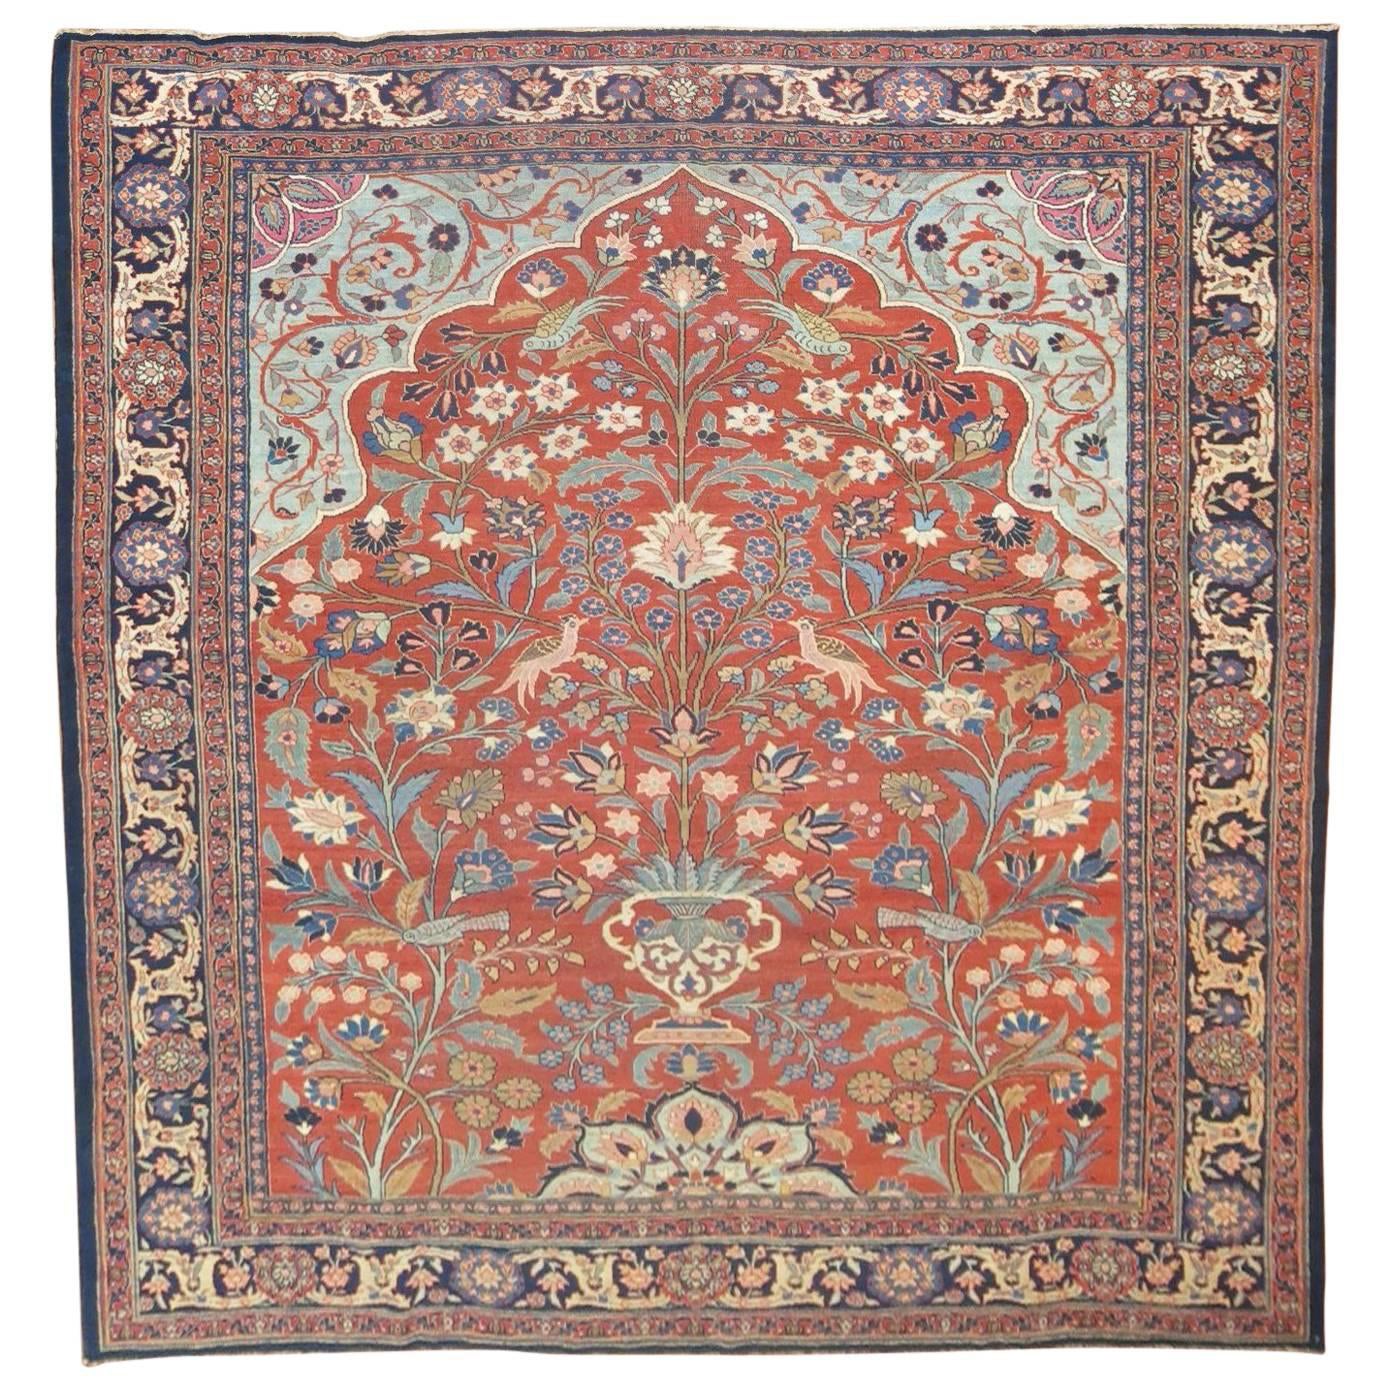 Pictorial Antique Persian Tabriz Carpet For Sale